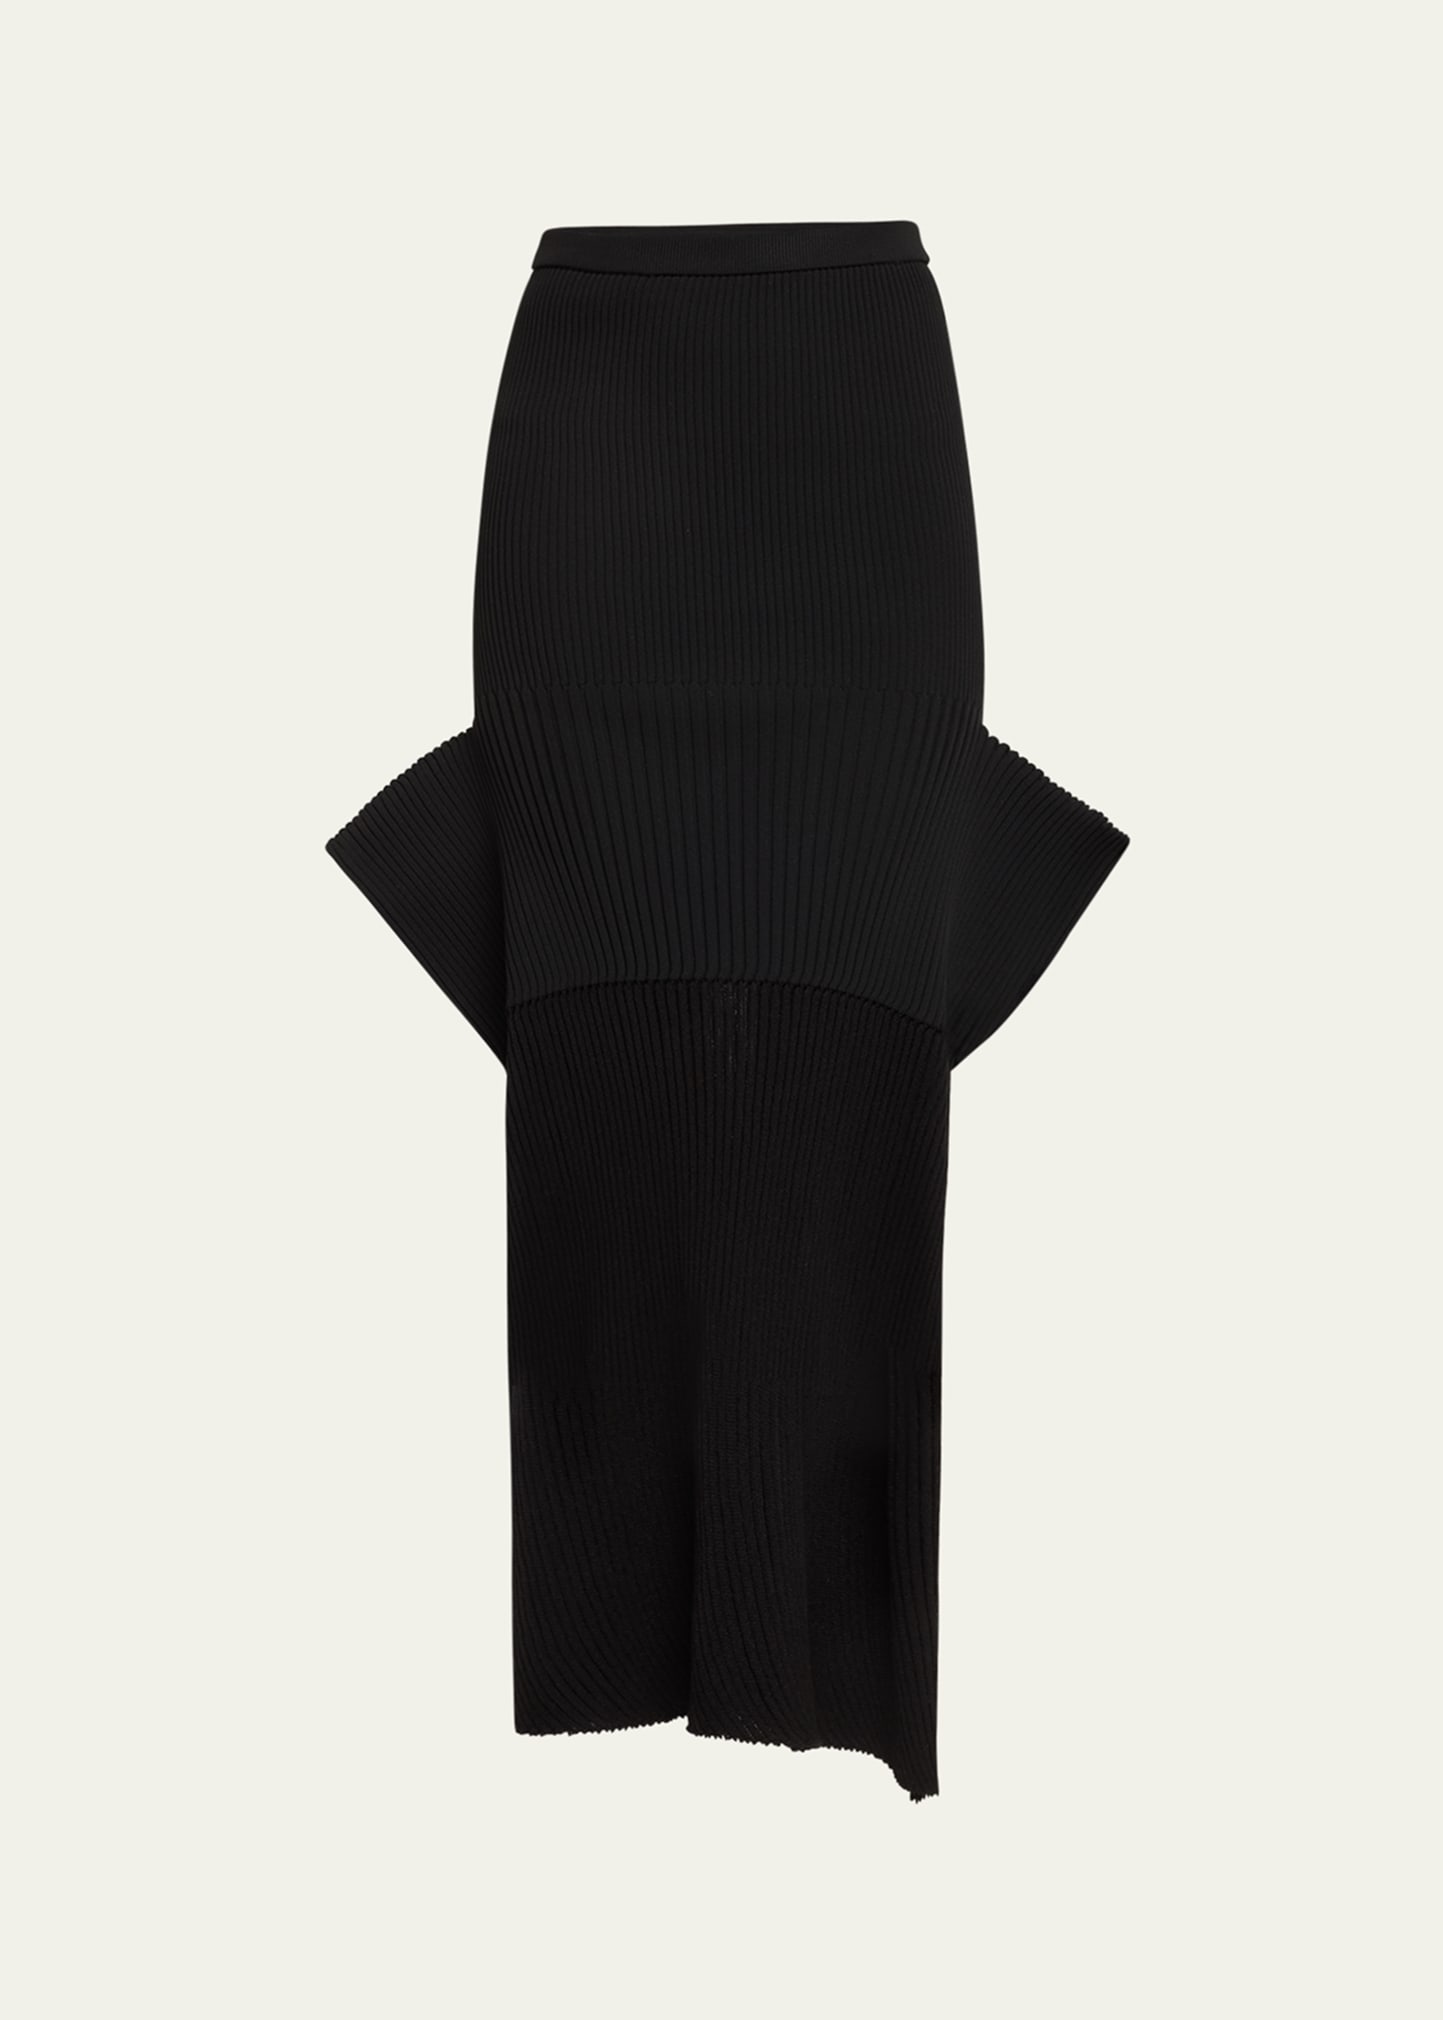 Sensu Structured Knit Skirt